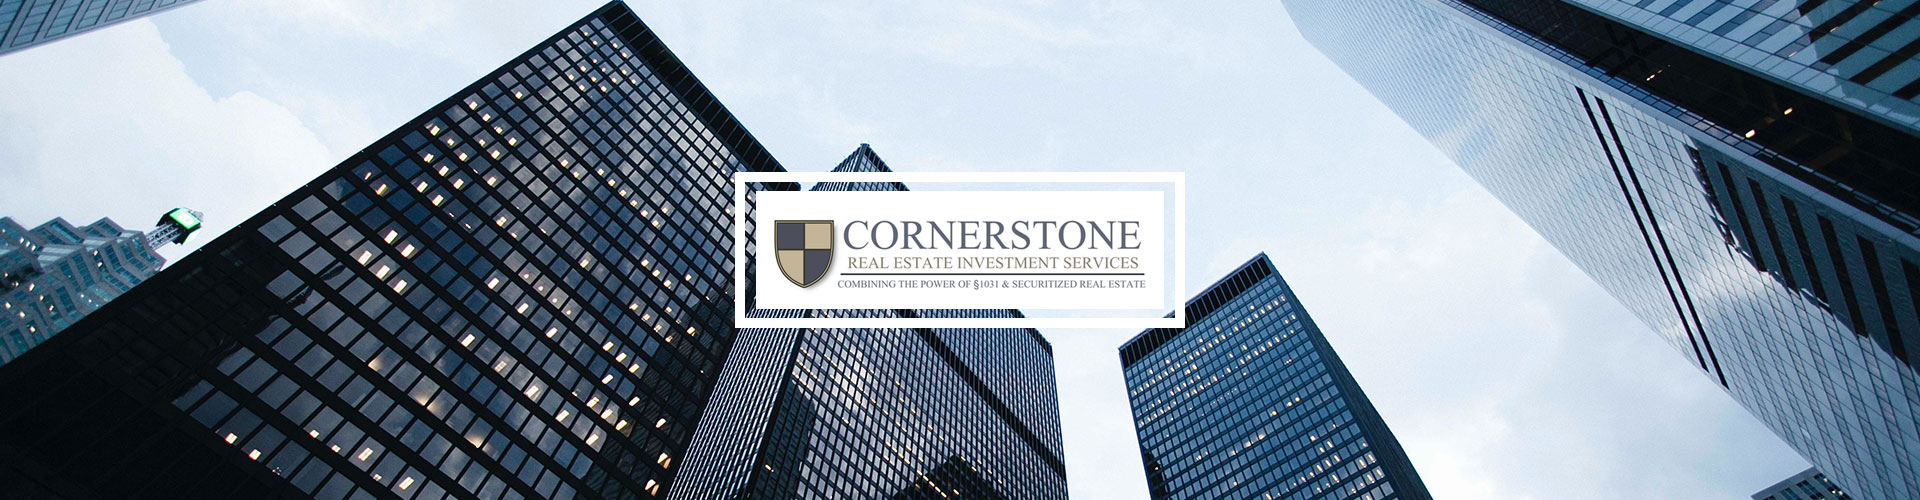 Cornerstone Real Estate banner